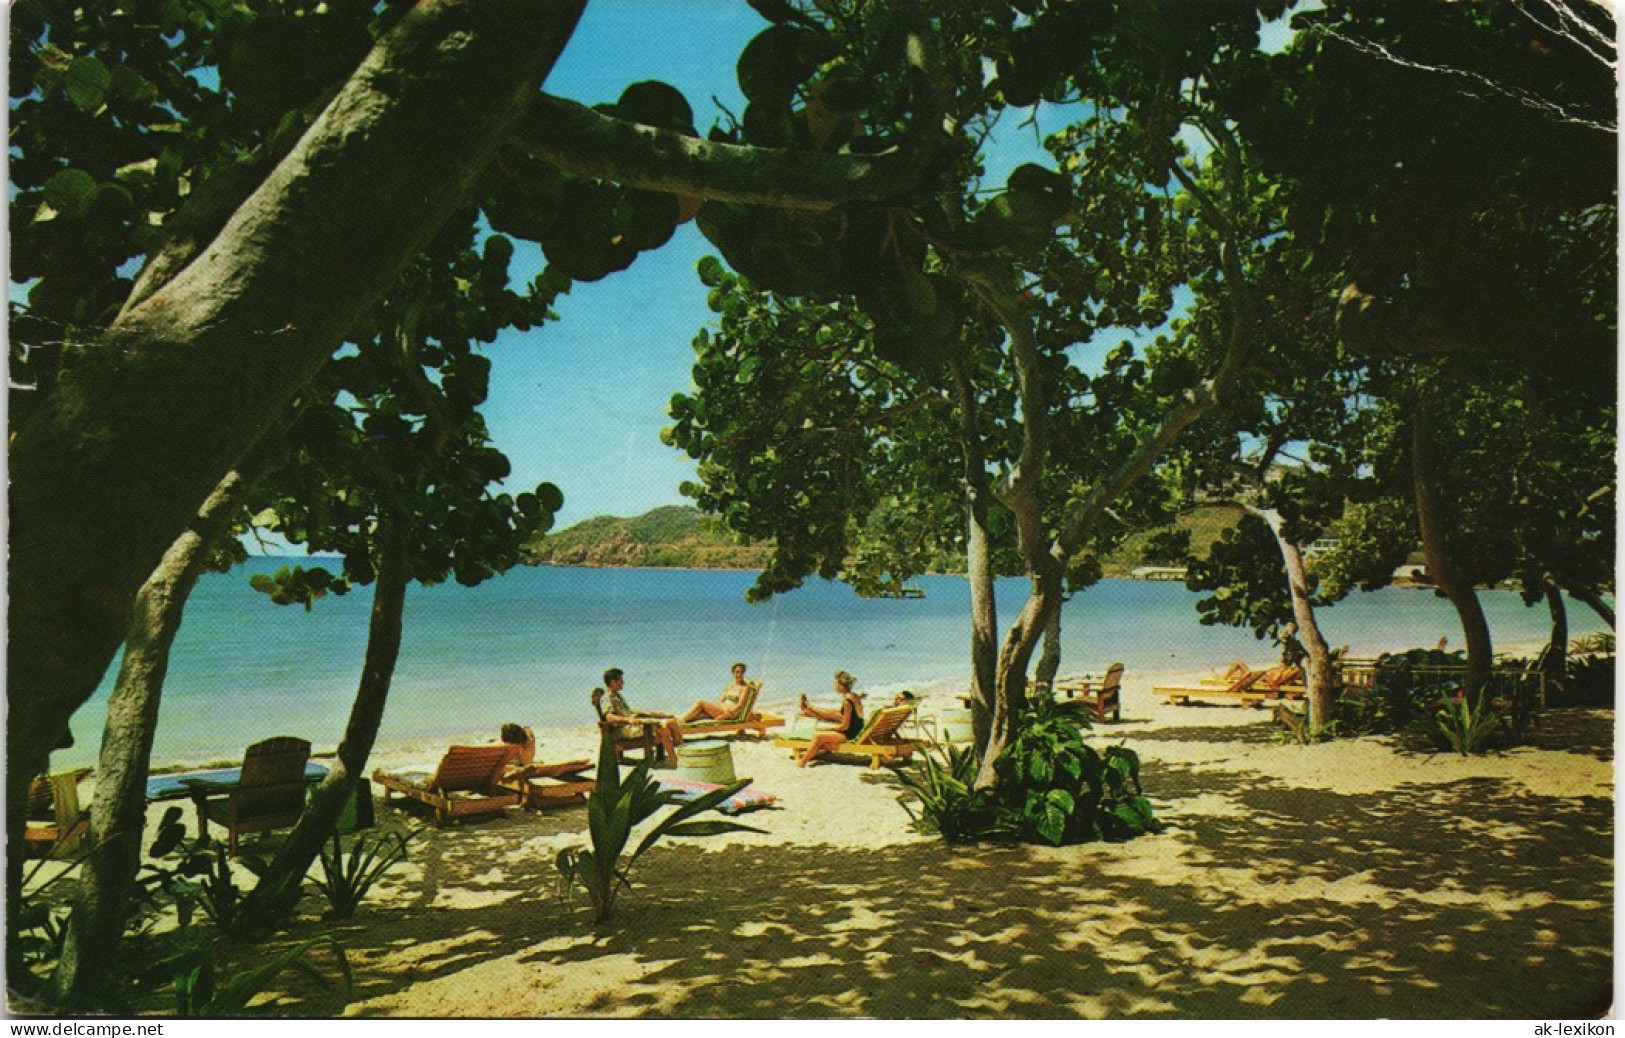 St. Thomas Sankt Thomas ISLAND BEACHCOMBER HOTEL Karibik Caribean Sea 1964 - Jungferninseln, Amerik.